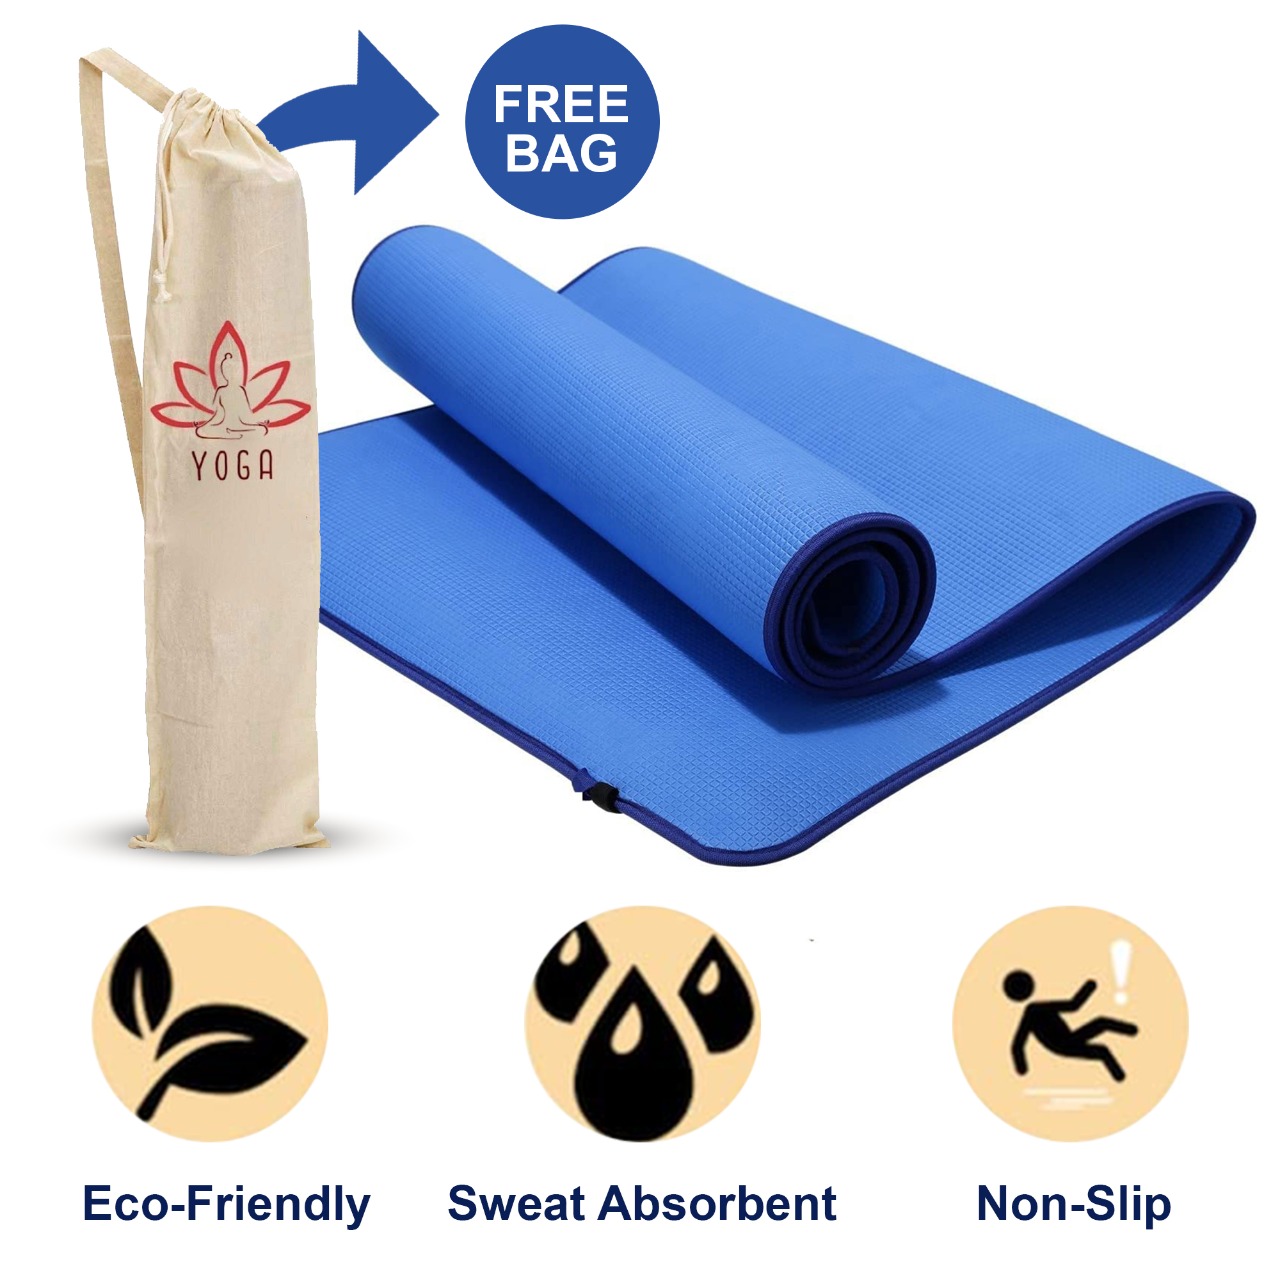 Body Flexi Yoga Mat With Free Bag Worth INR 250